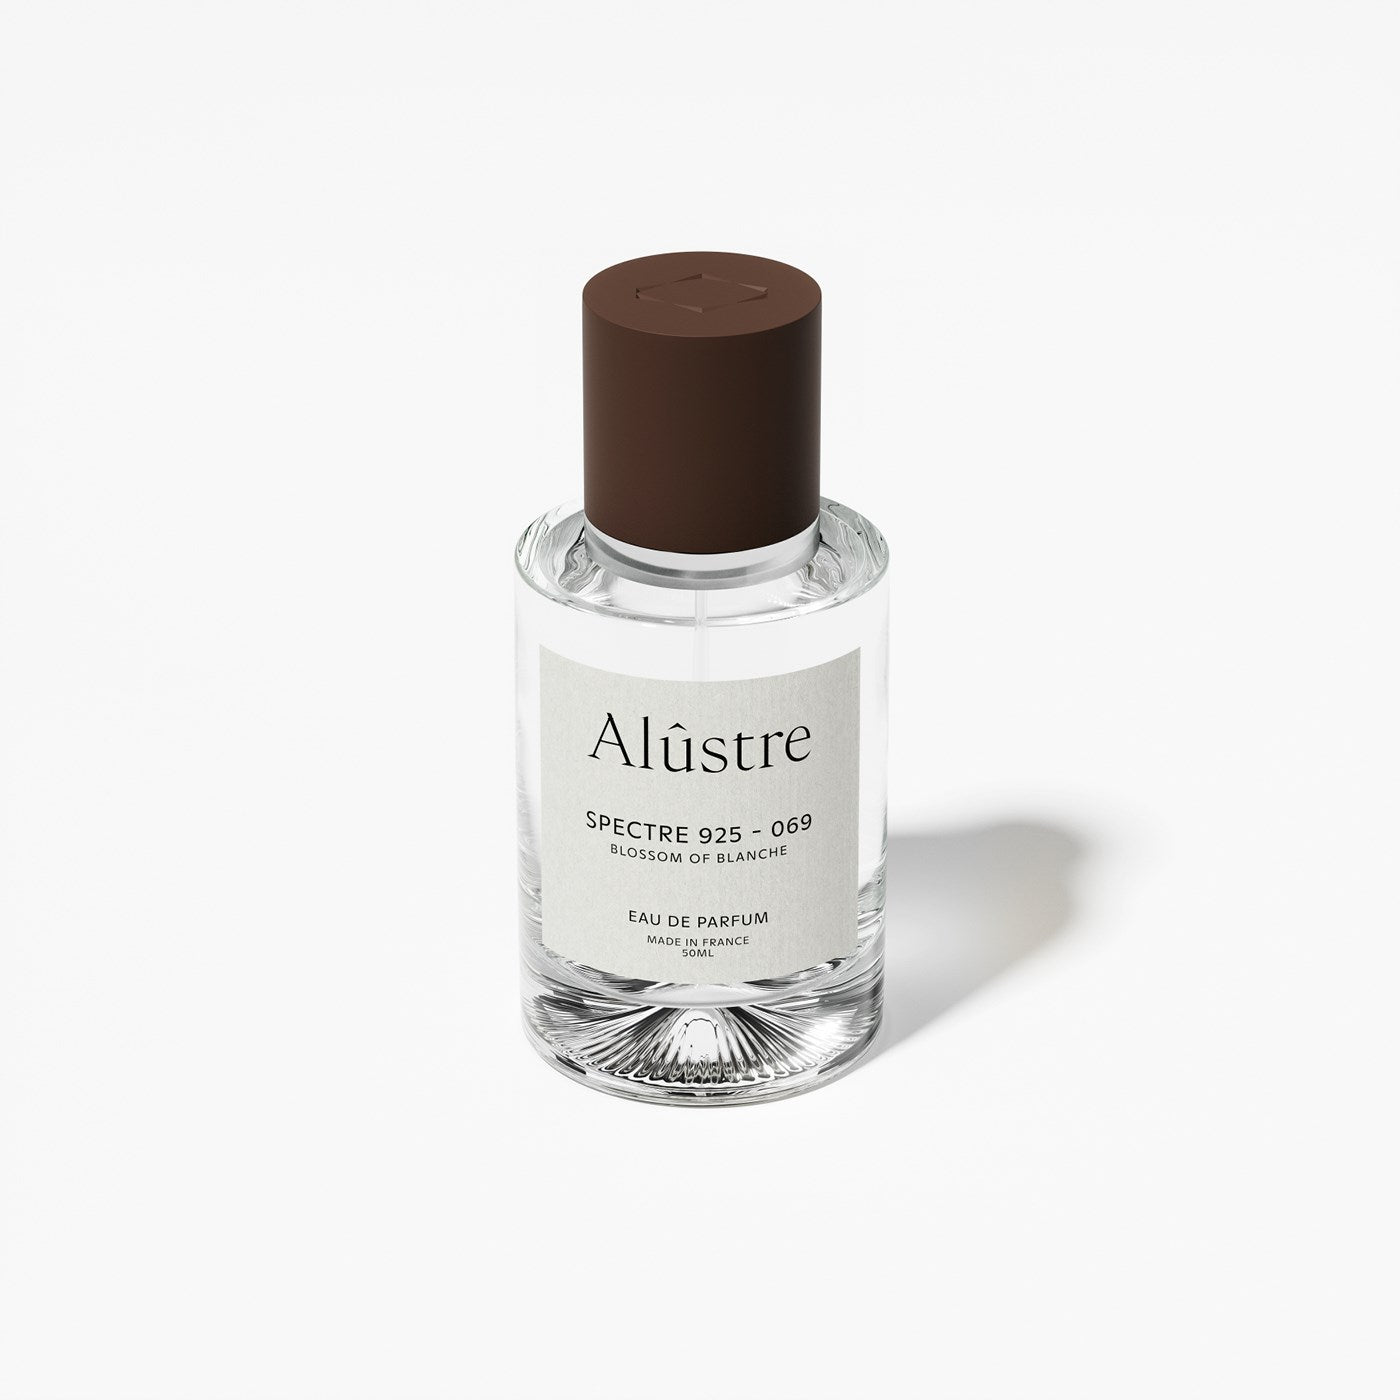 Alûstre Packshot Perfume 50Ml 925 069 02 (1)